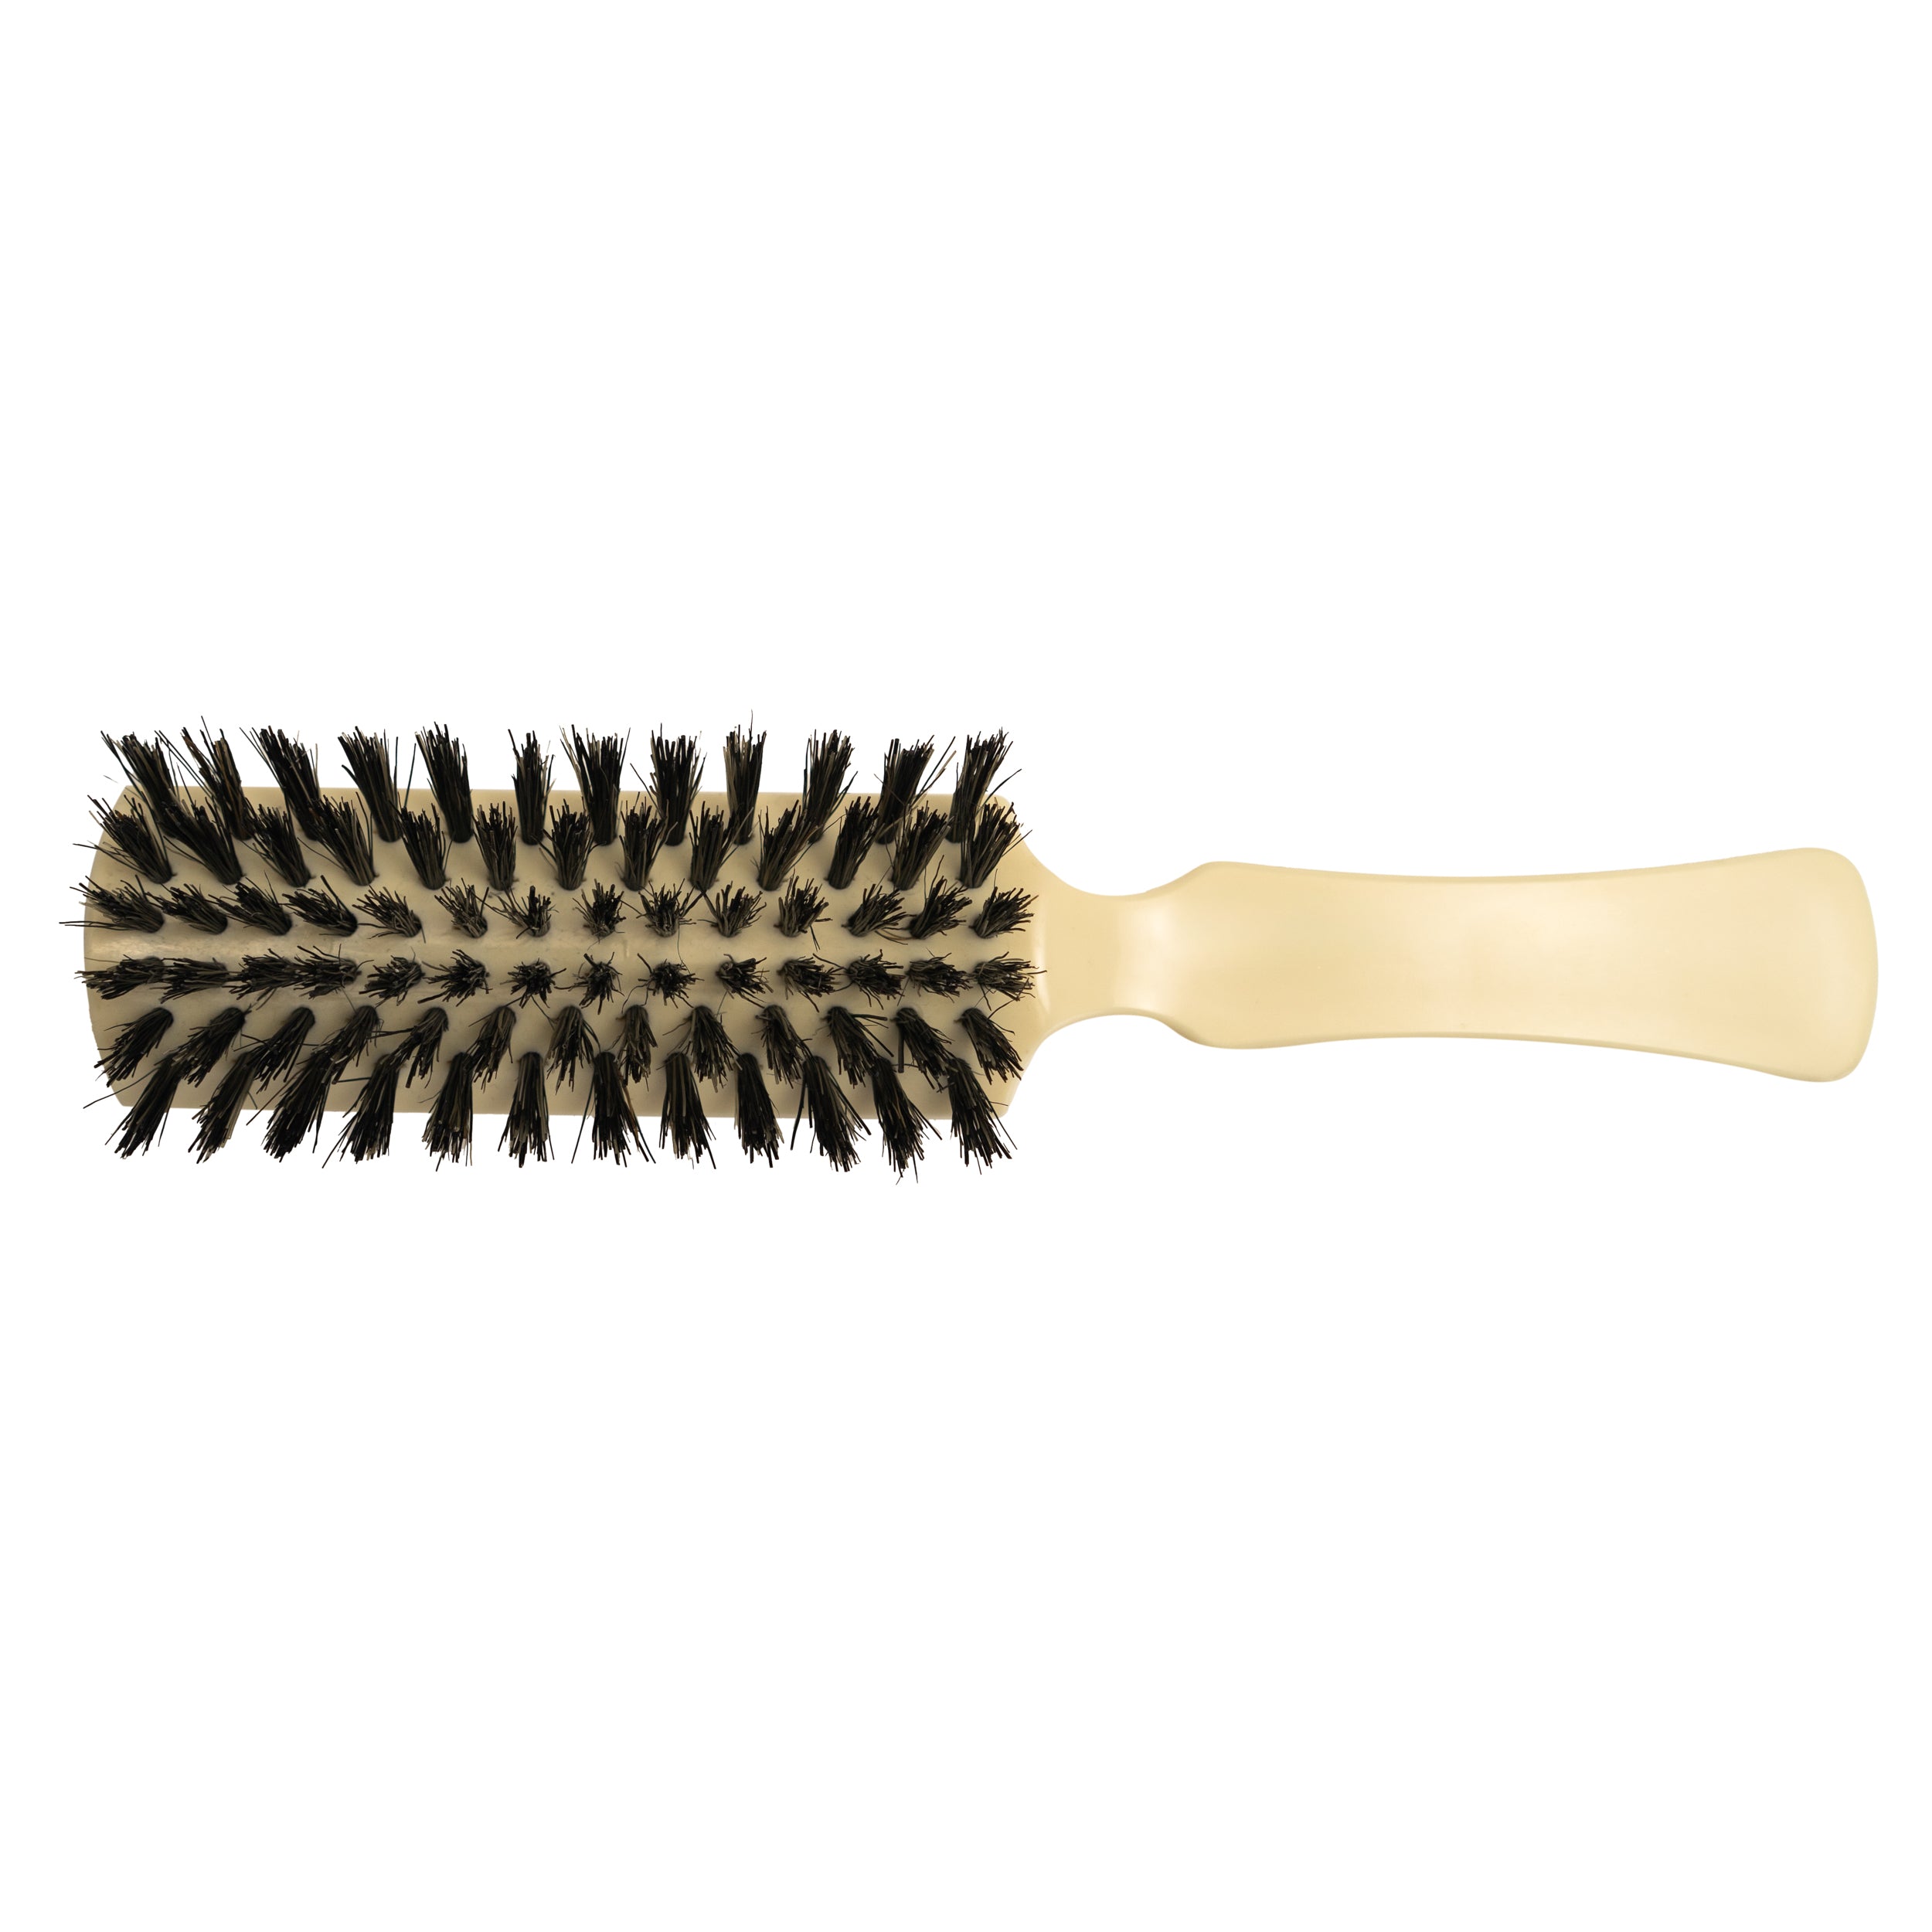 House of Fuller® Lustrebrush Professional Hairbrush With Natural Boars Hair Bristles for Gentle Brushing